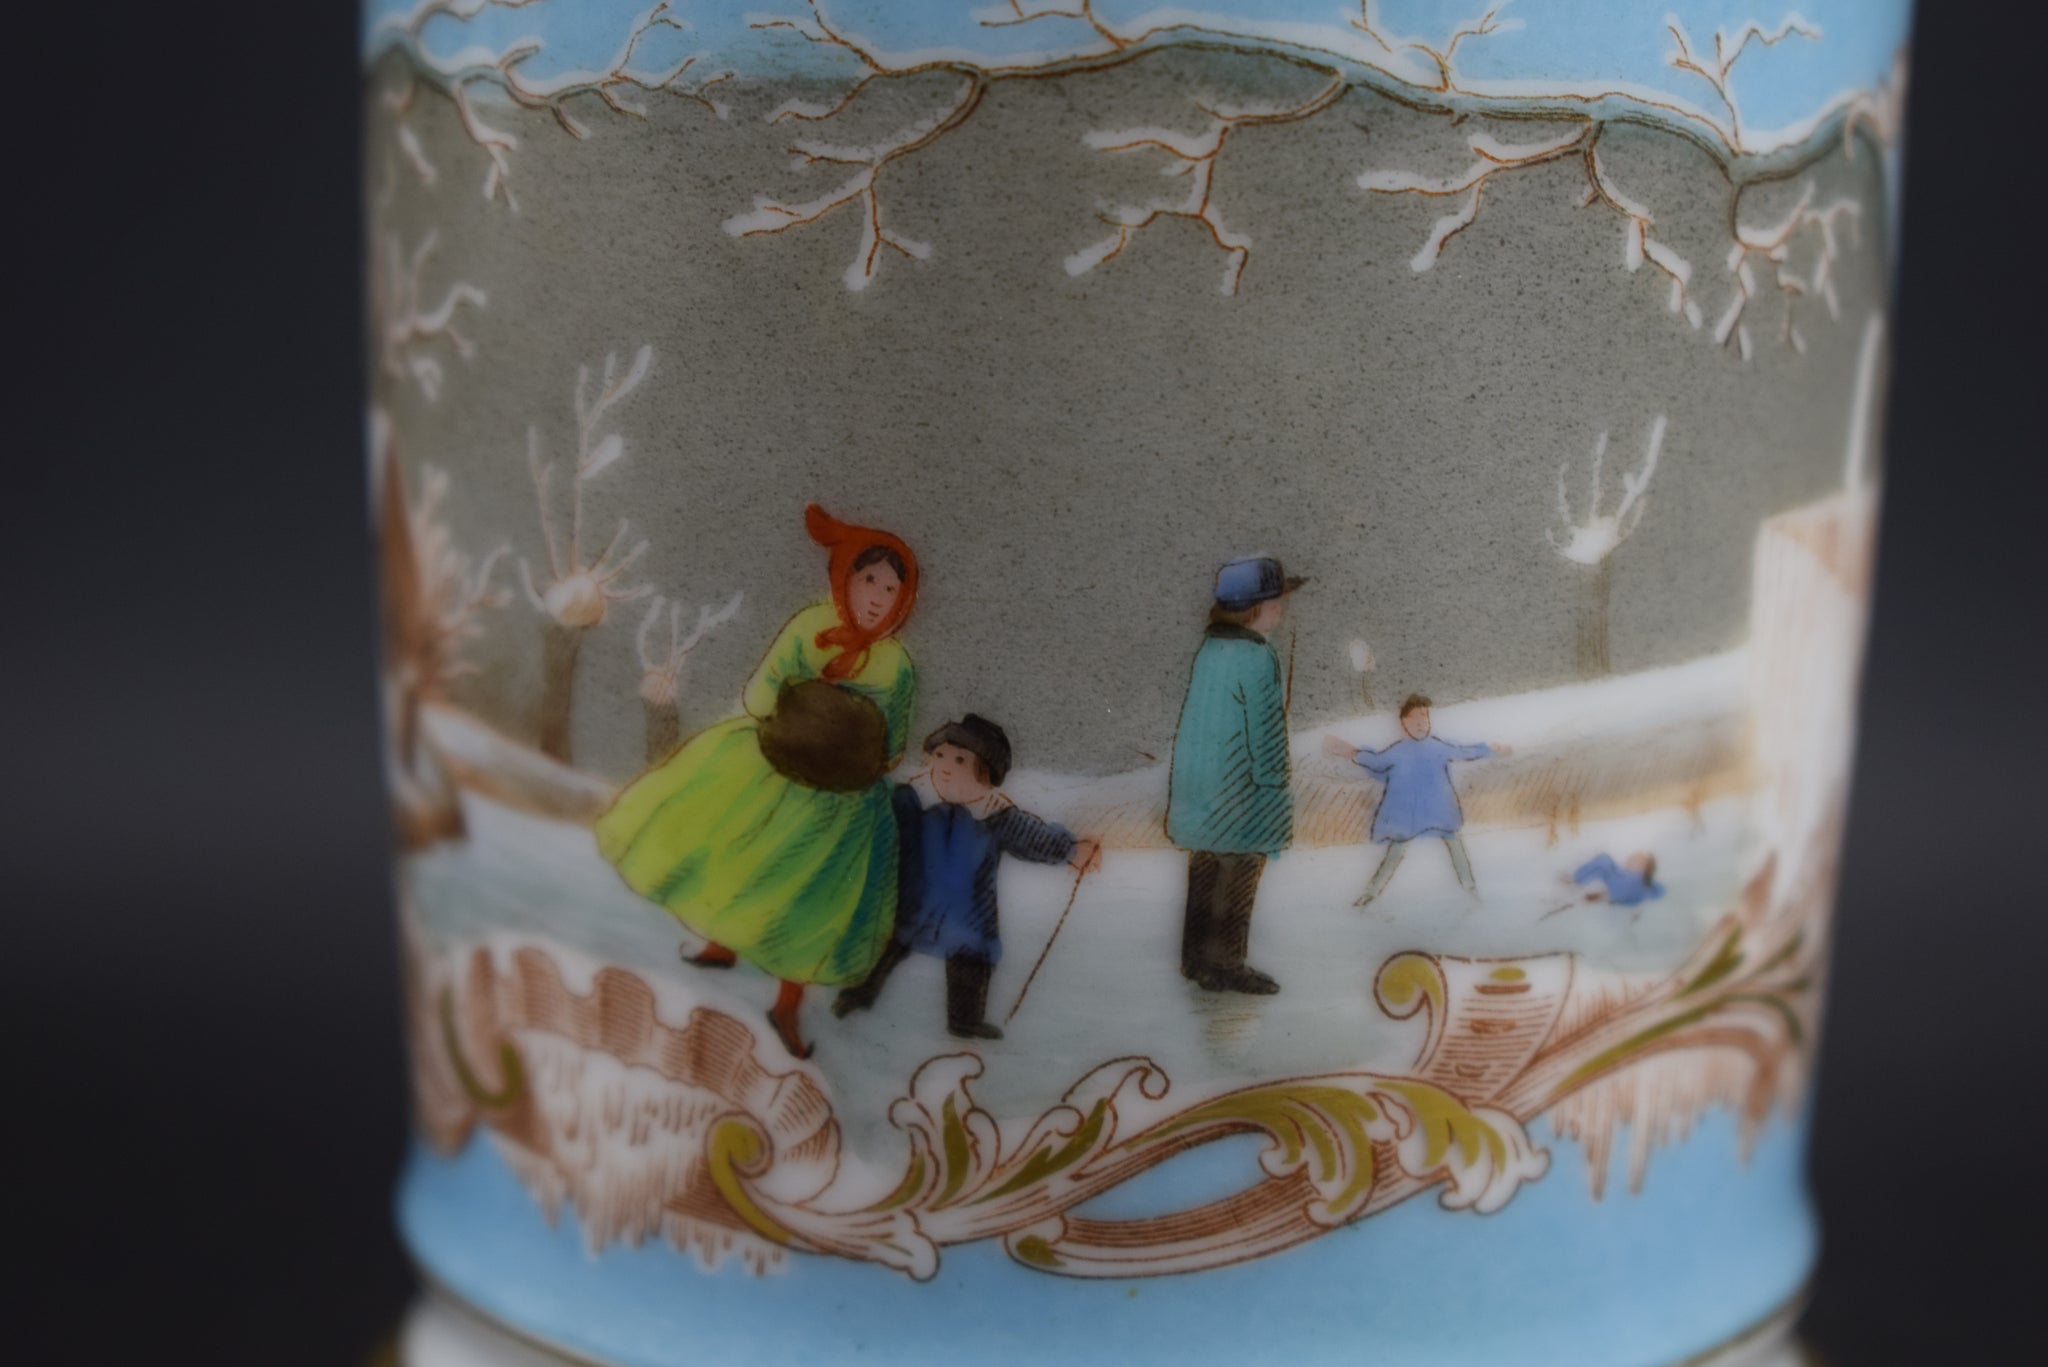 Chocolate Cup Porcelain of Paris 19th